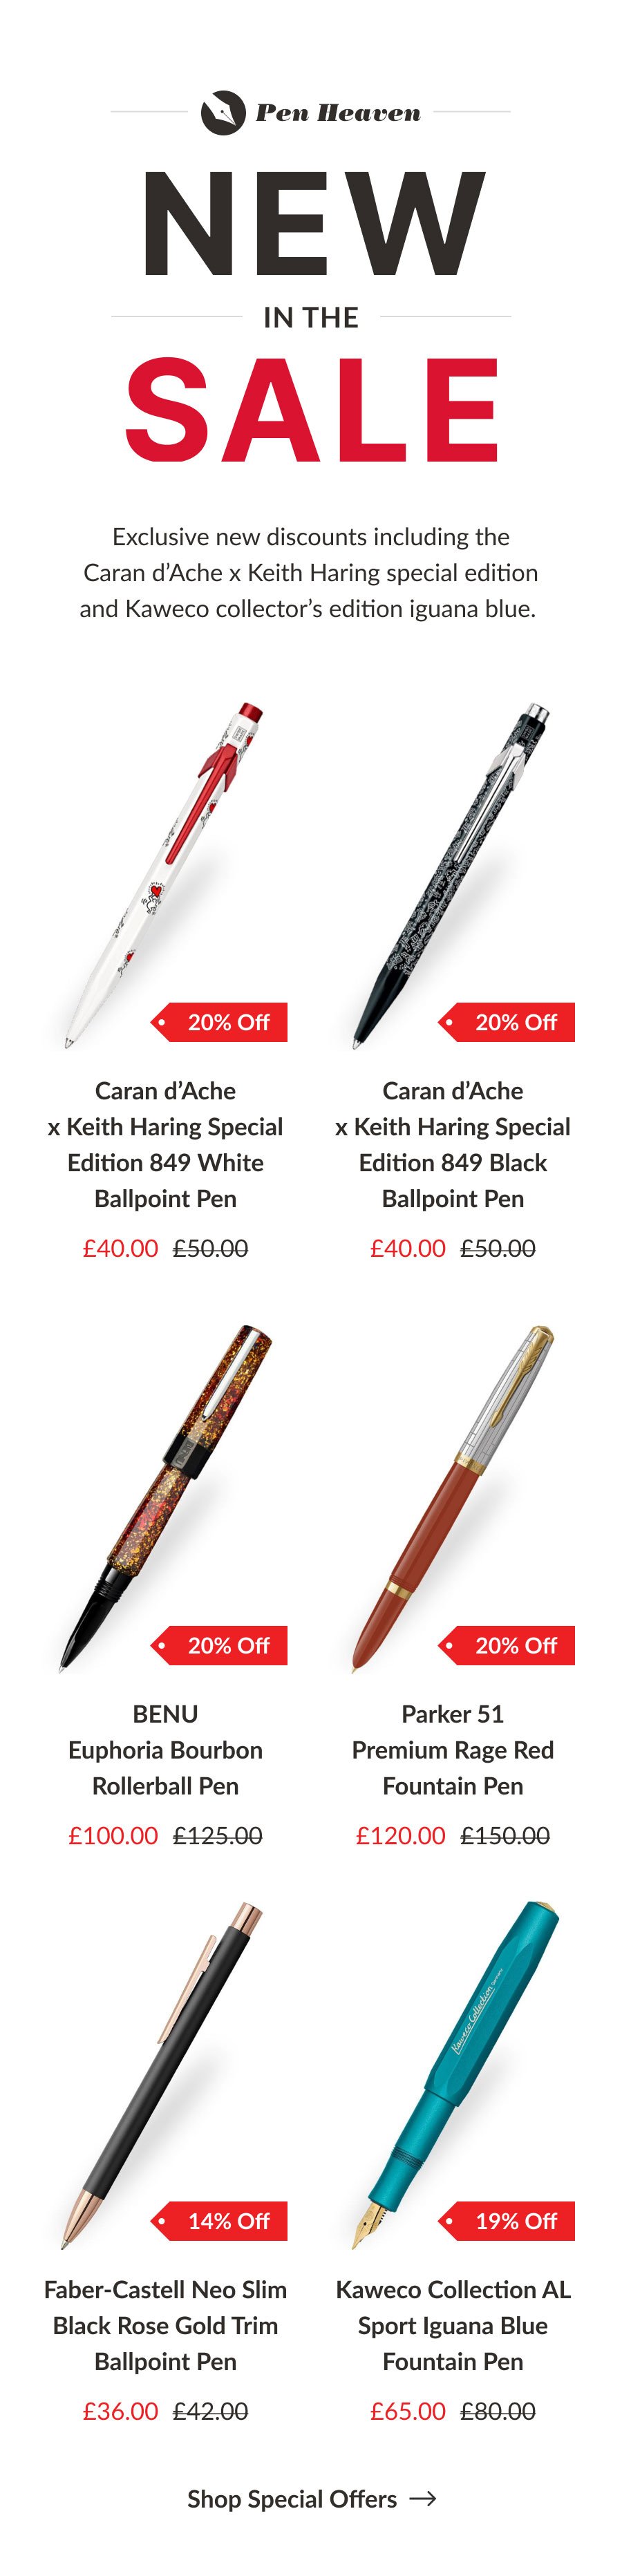 Caran d'Ache x Keith Haring Special Edition 849 White Ballpoint Pen